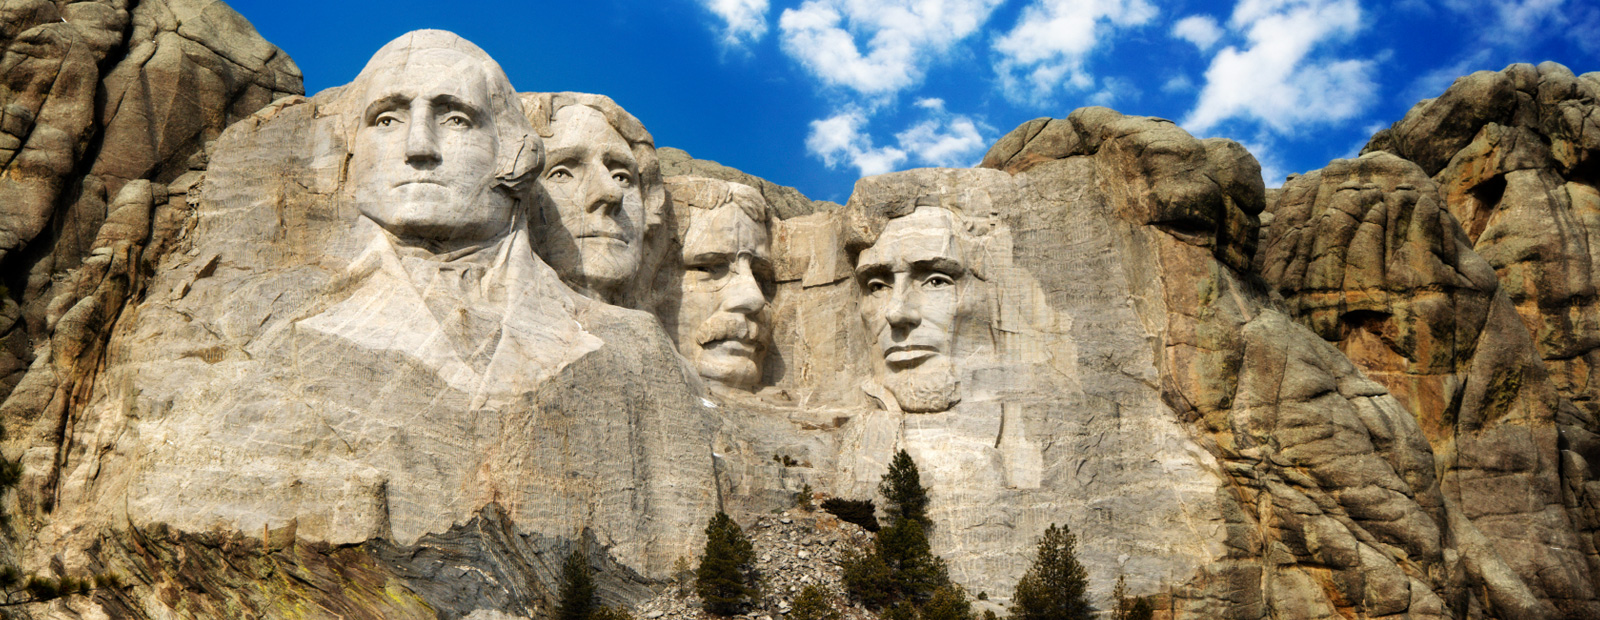 Mount Rushmore #3